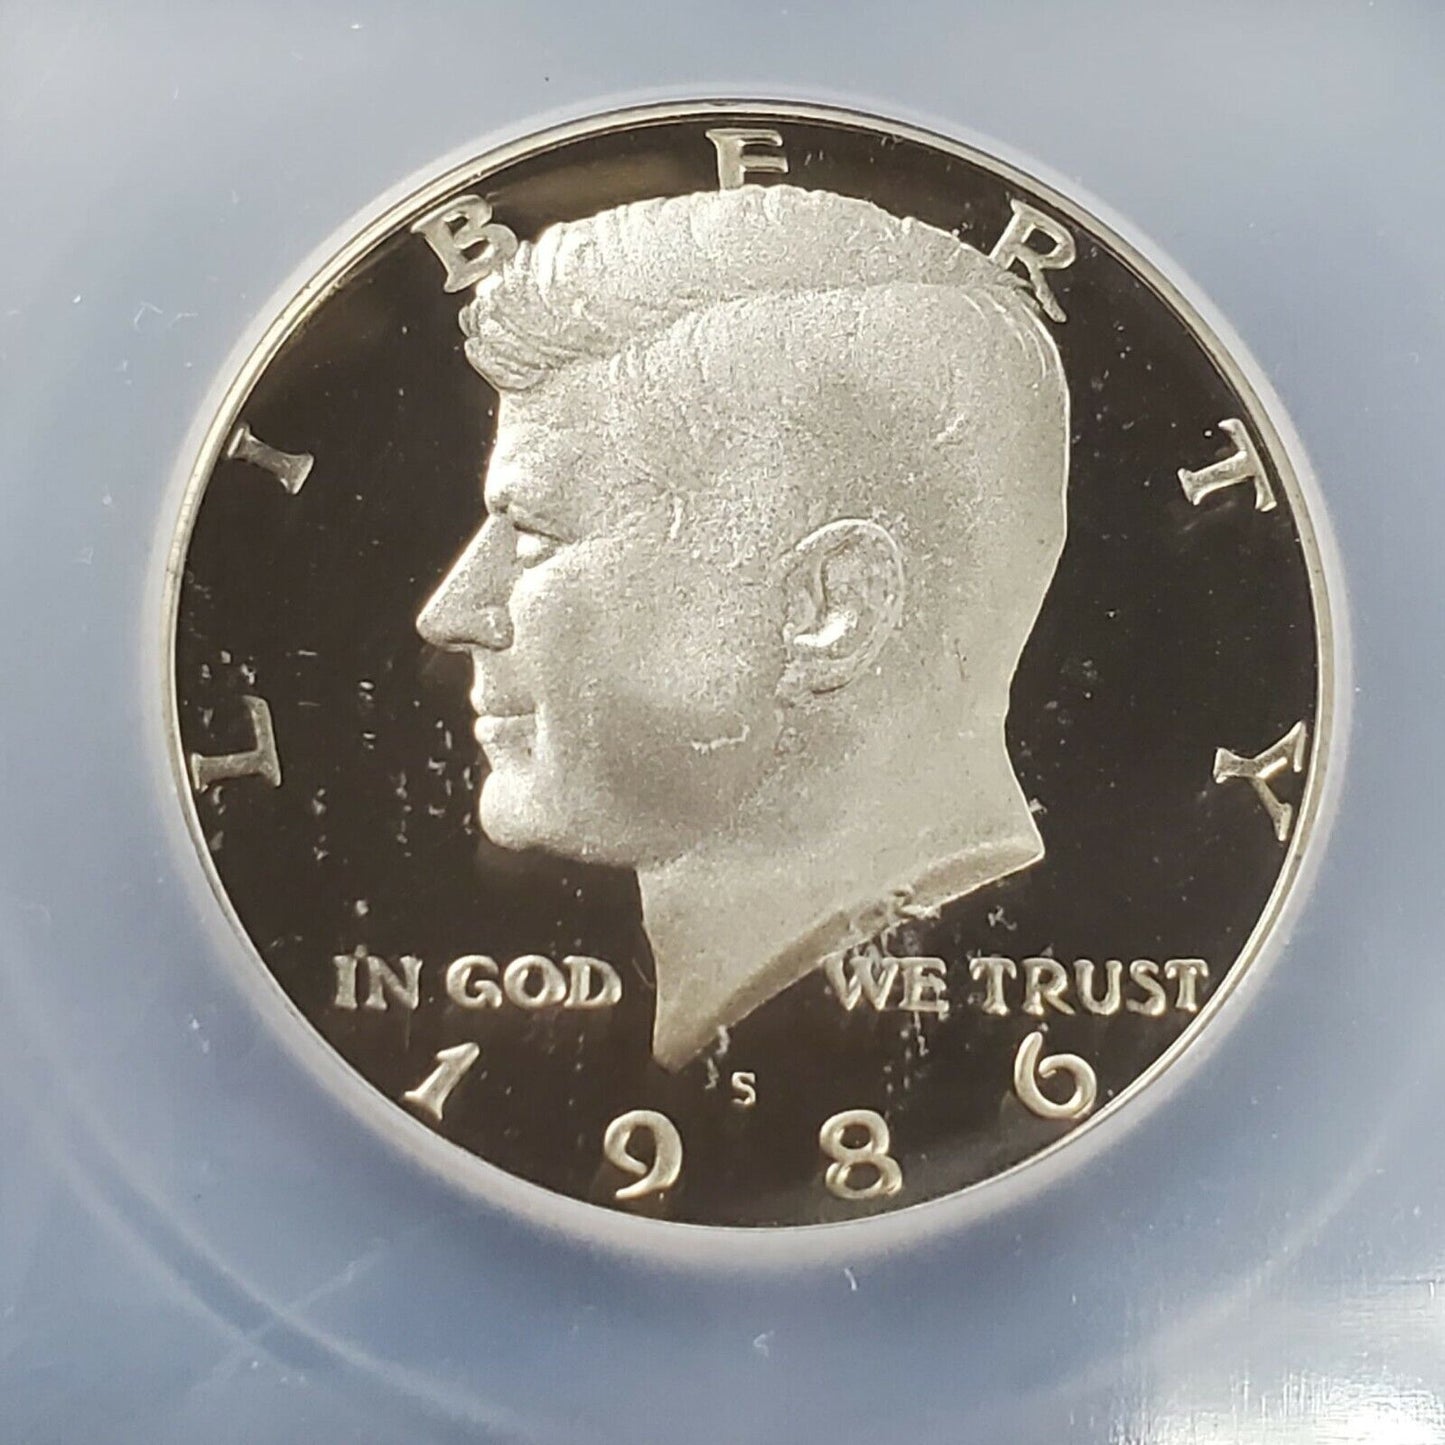 1986 S Kennedy Clad Half dollar Coin ICG PF70 DCAM